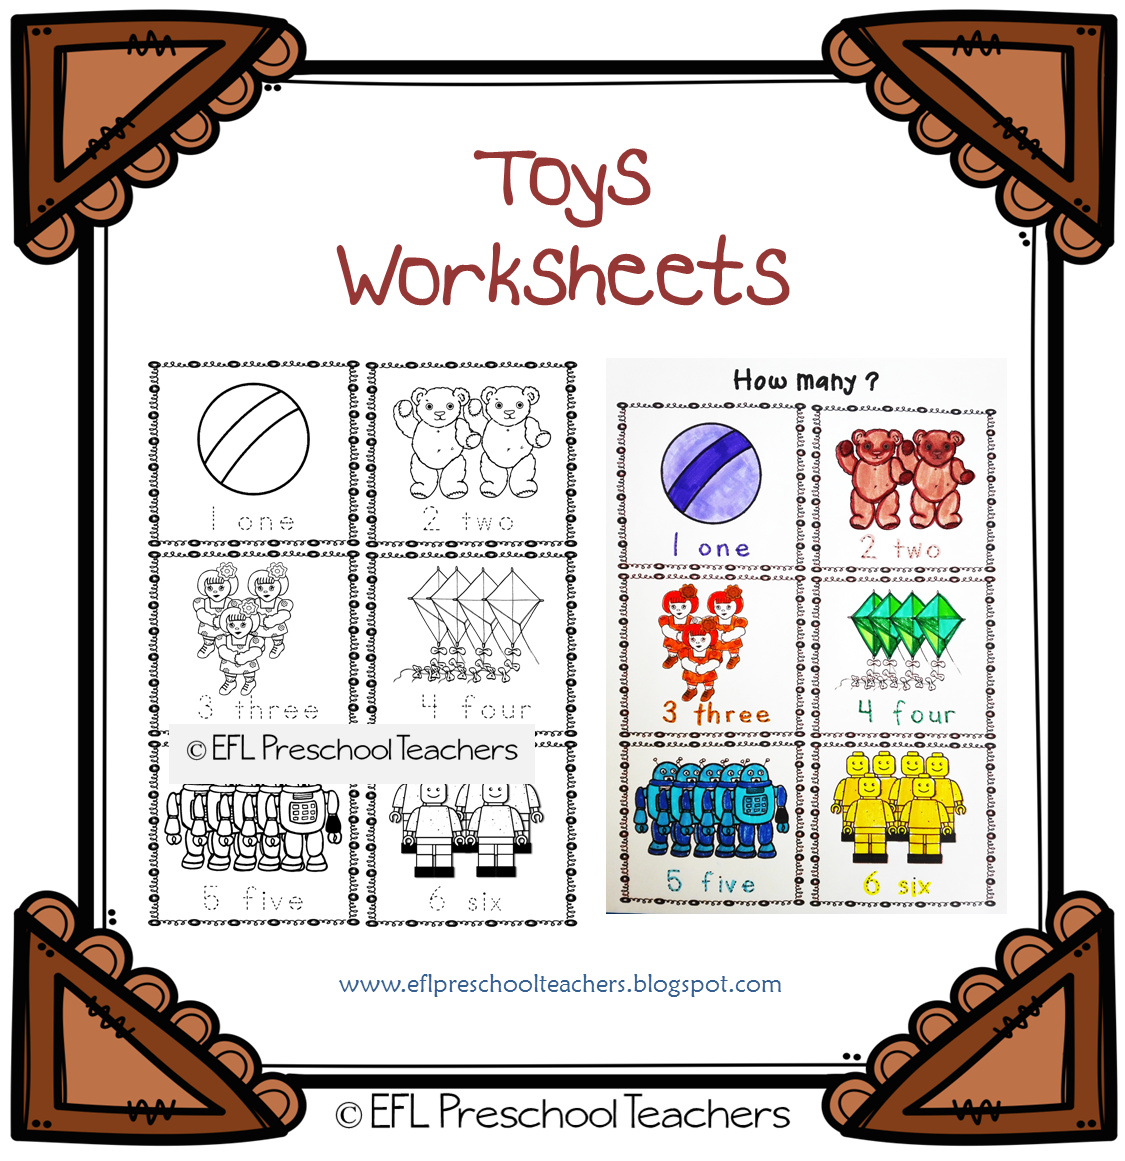 How many Worksheet. How many Toys Worksheet. How many Worksheets for Kids. How many Toys are there. How many units